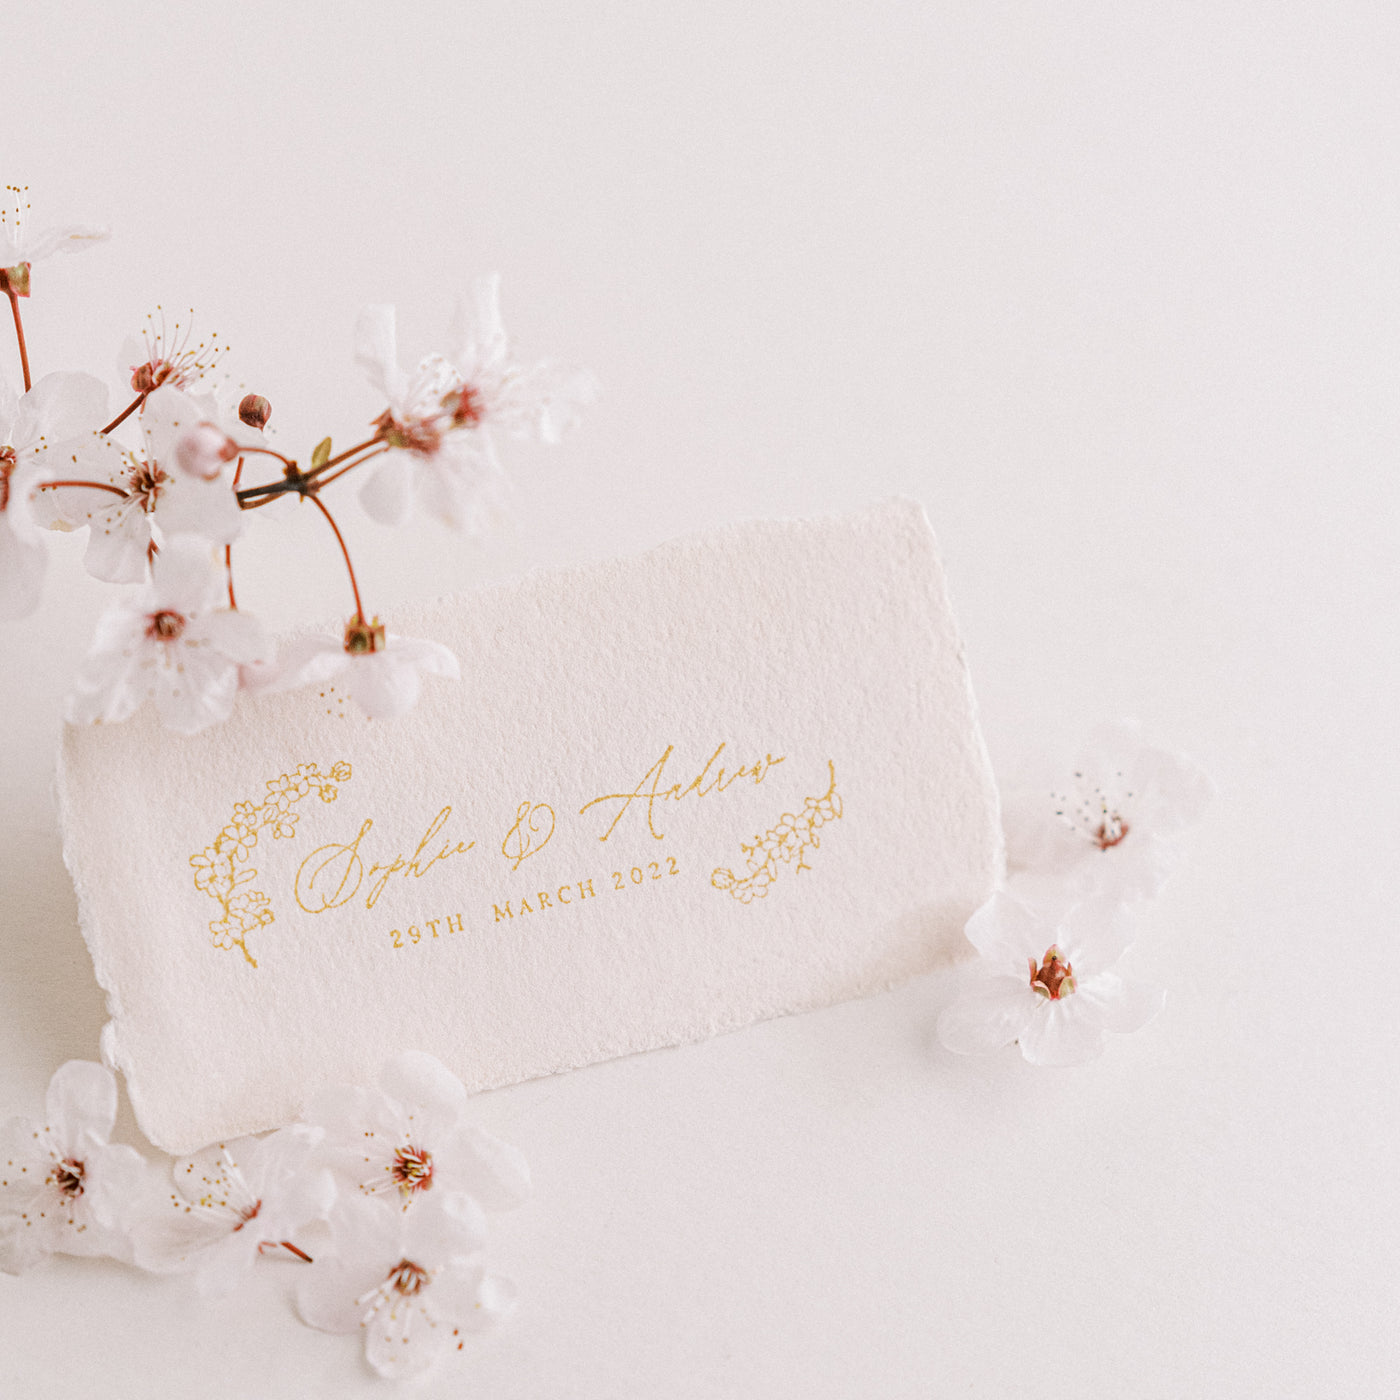 Suki Cherry Blossom Save The Date Rubber Stamp for Fine Art Wedding Invitations | 'Sakura' Cherry Blossom Embellishments for Blush Pink Spring Wedding | Heirloom Seals